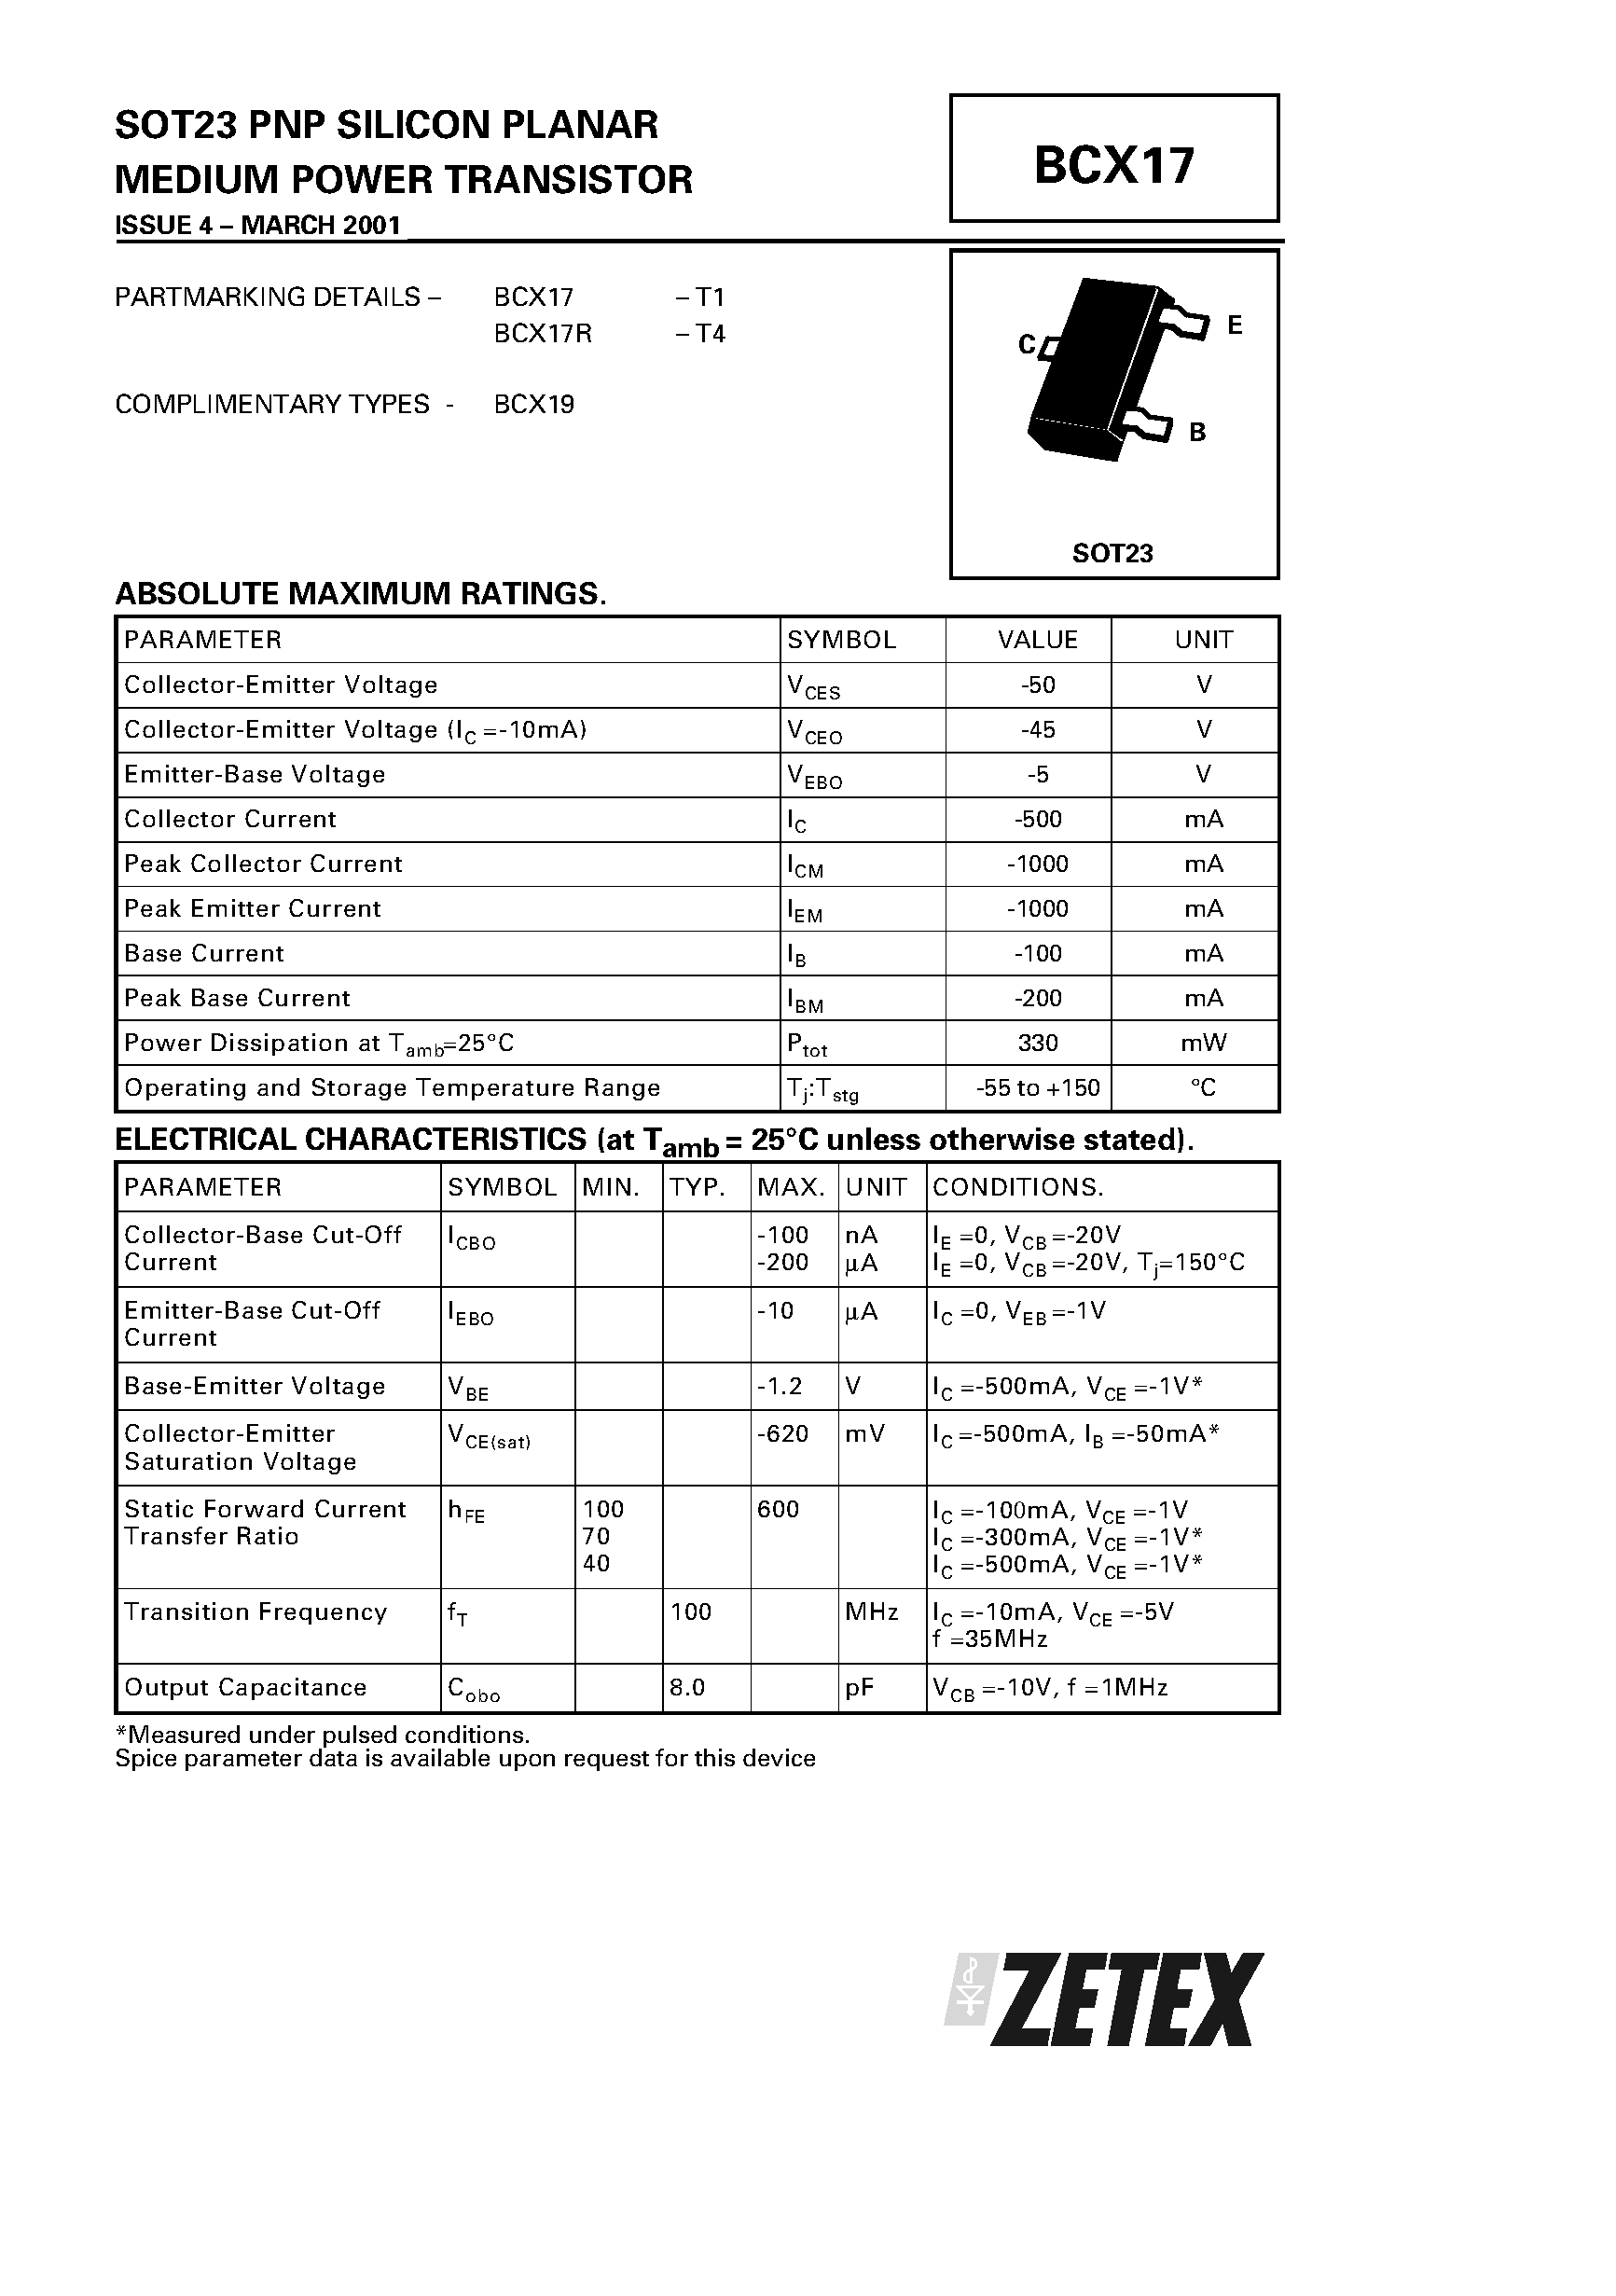 Datasheet BCX17 - PNP SILICON PLANAR MEDIUM POWER TRANSISTOR page 1